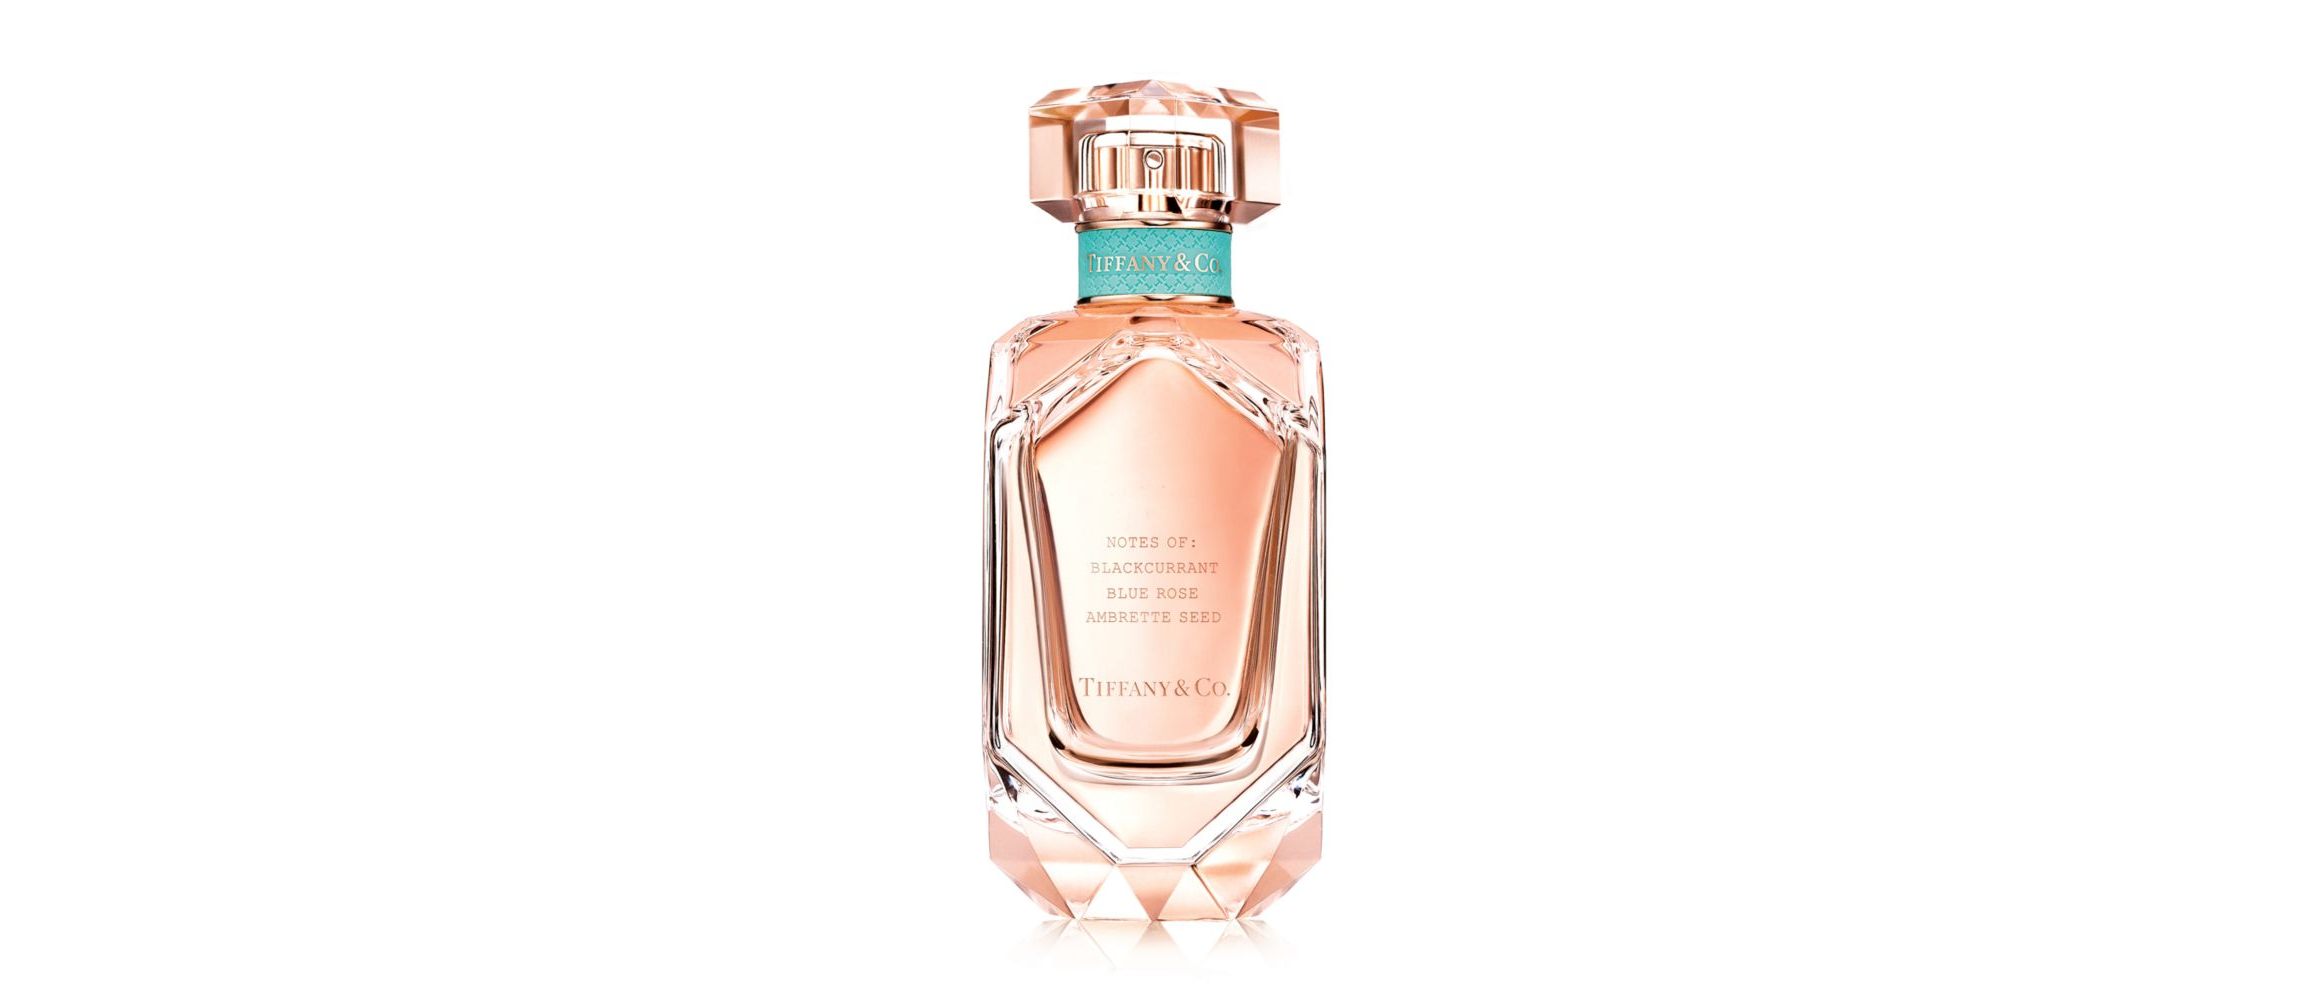 Tiffany & Co. Rose Gold парфюмерная вода